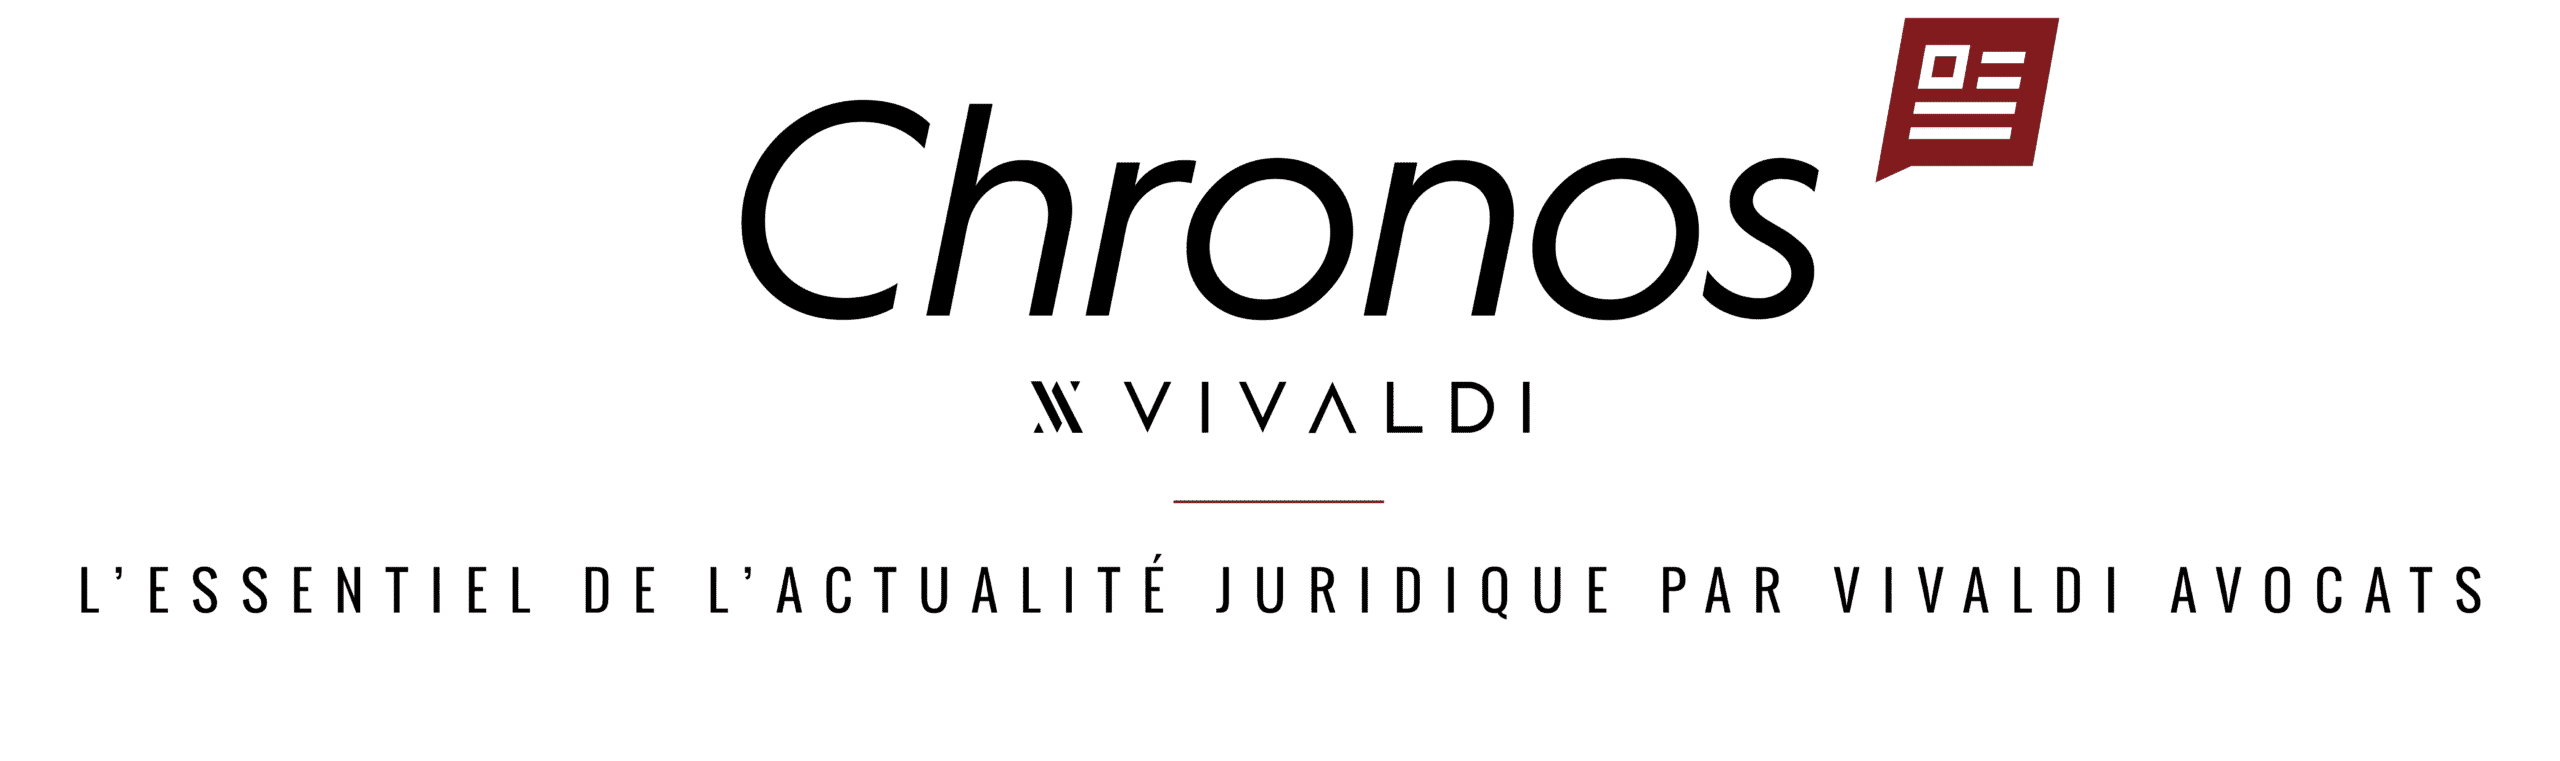 Chronos - Vivaldi avocats